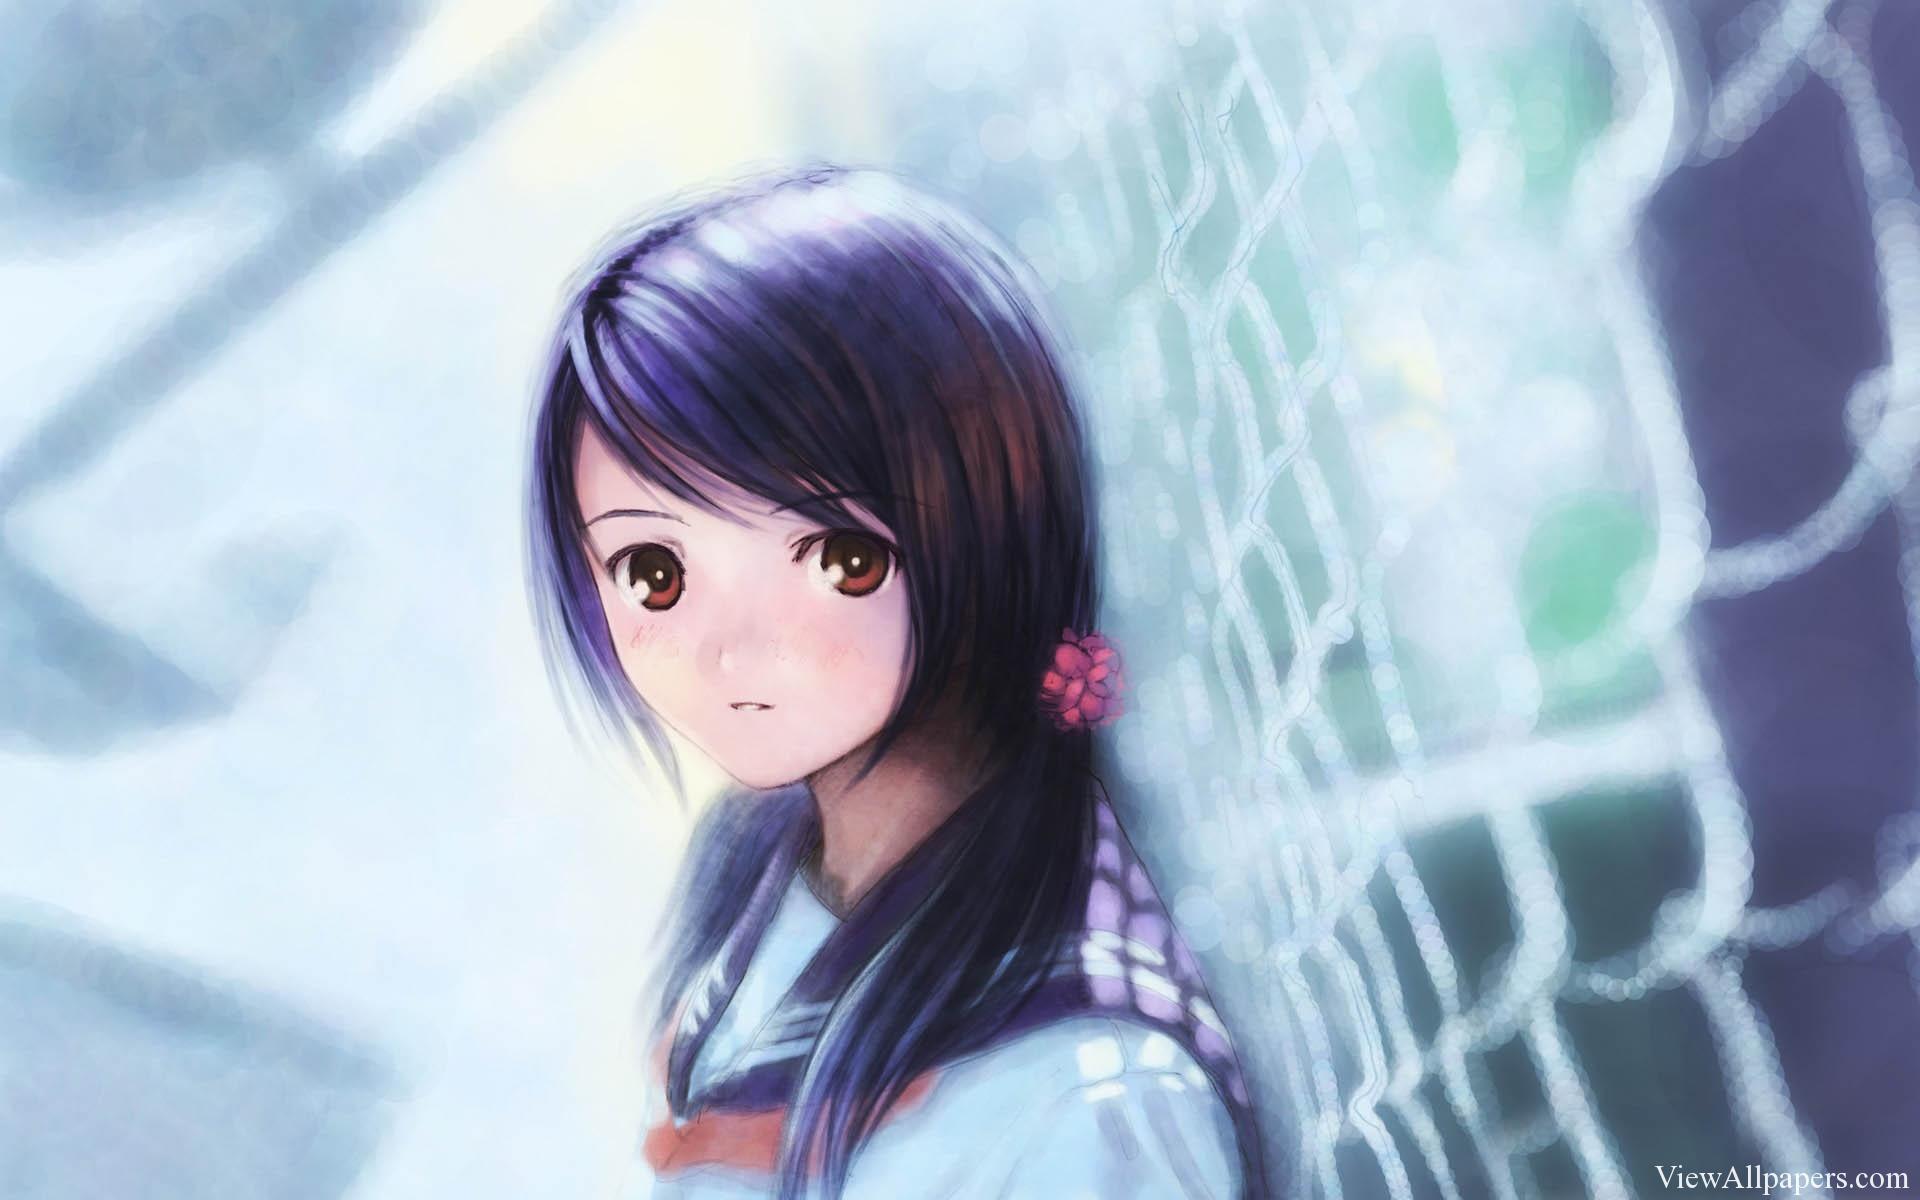 Sad Anime Girl Wallpaper HD Background Free Download